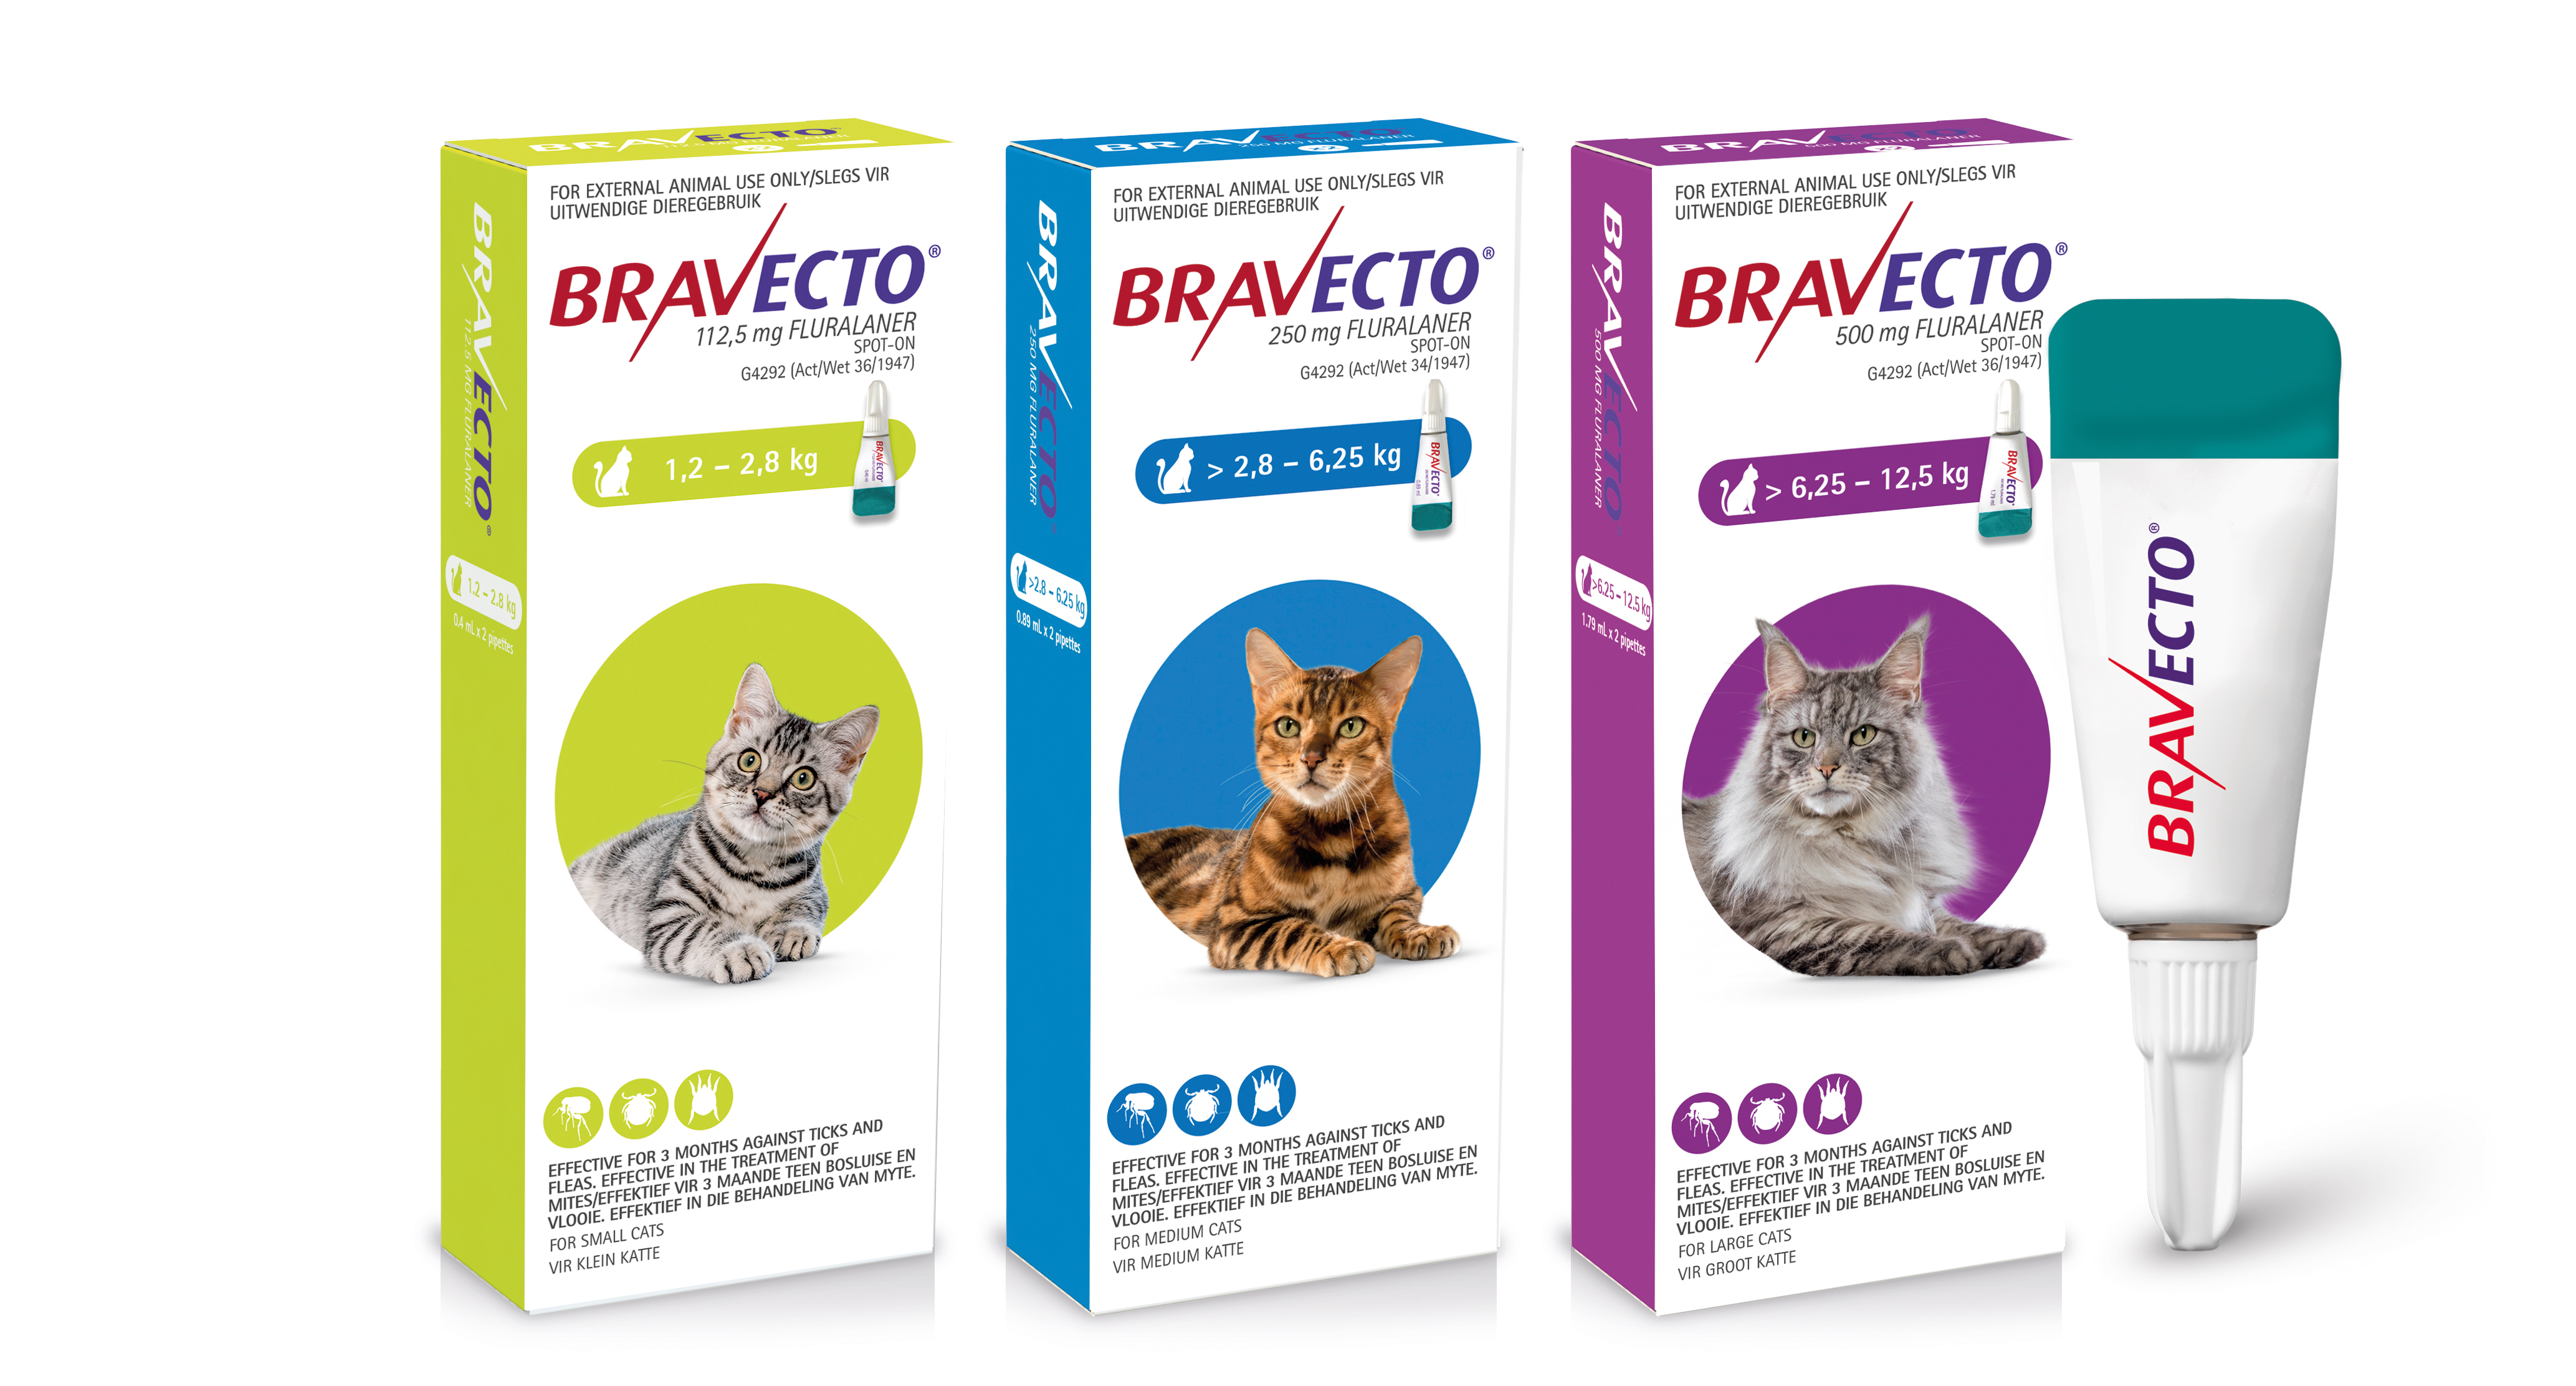 Bravecto SpotOn For Cats Pet Hero